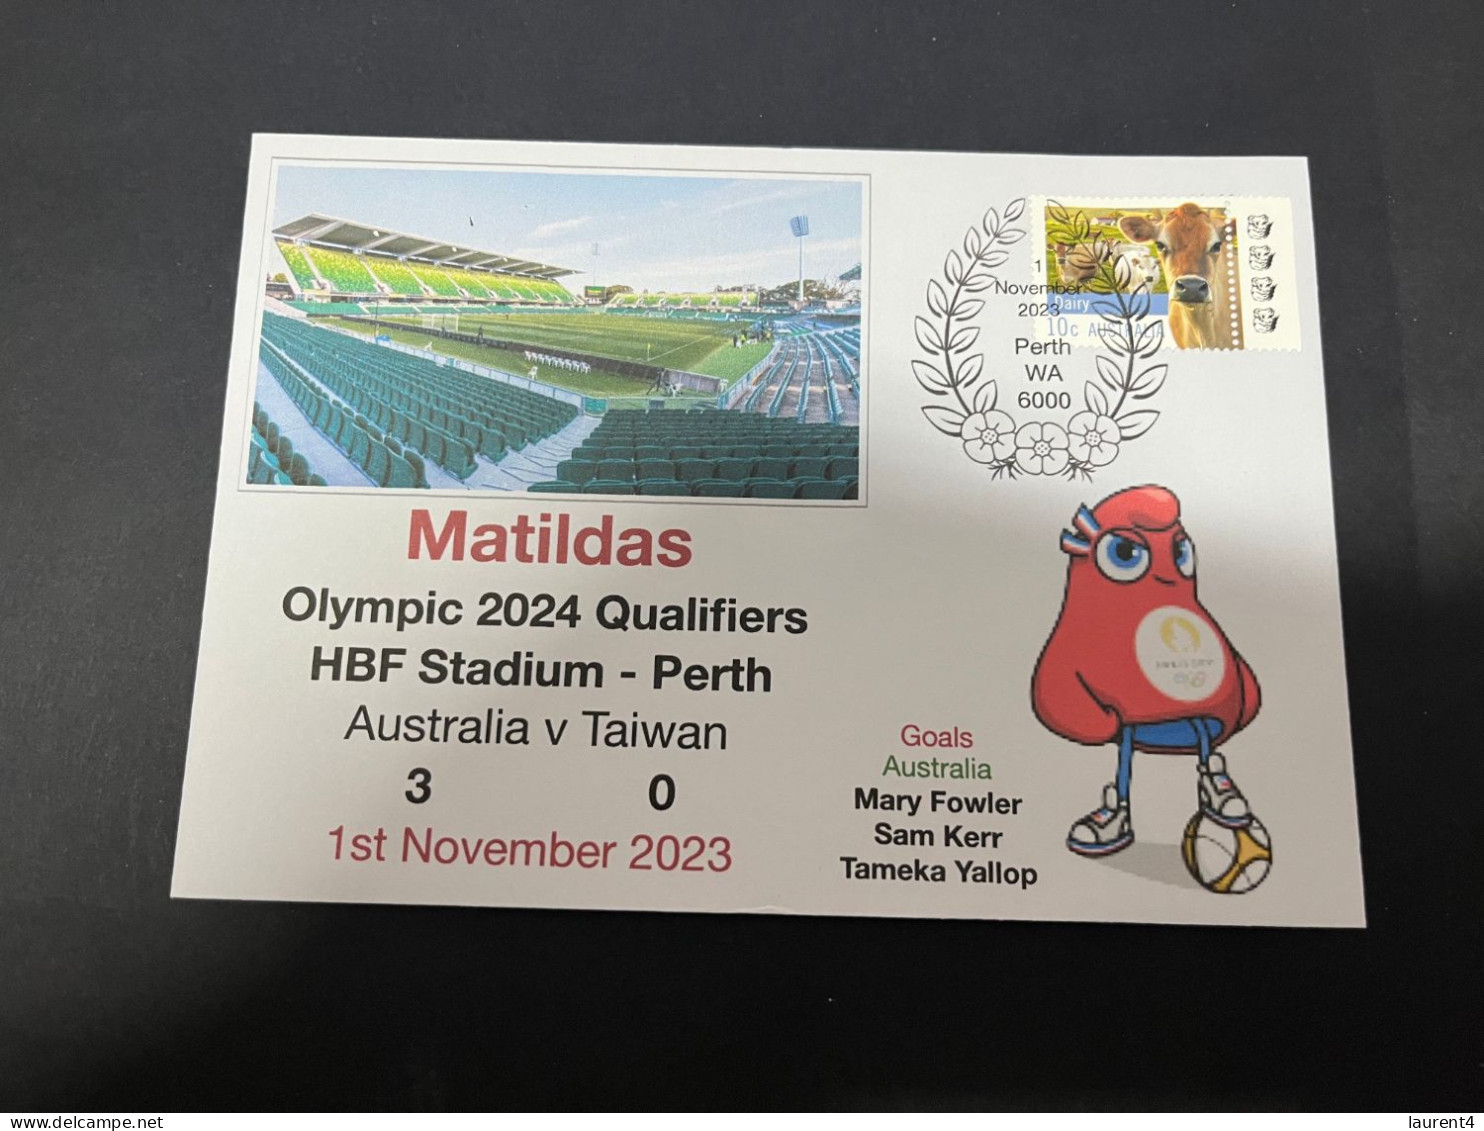 4-11-2023 (1 V 18) Australia (3) V Taiwan (0) - Matildas Olympic 2024 Qualifiers (match 3) 1-11-2023 In Perth - Sommer 2024: Paris